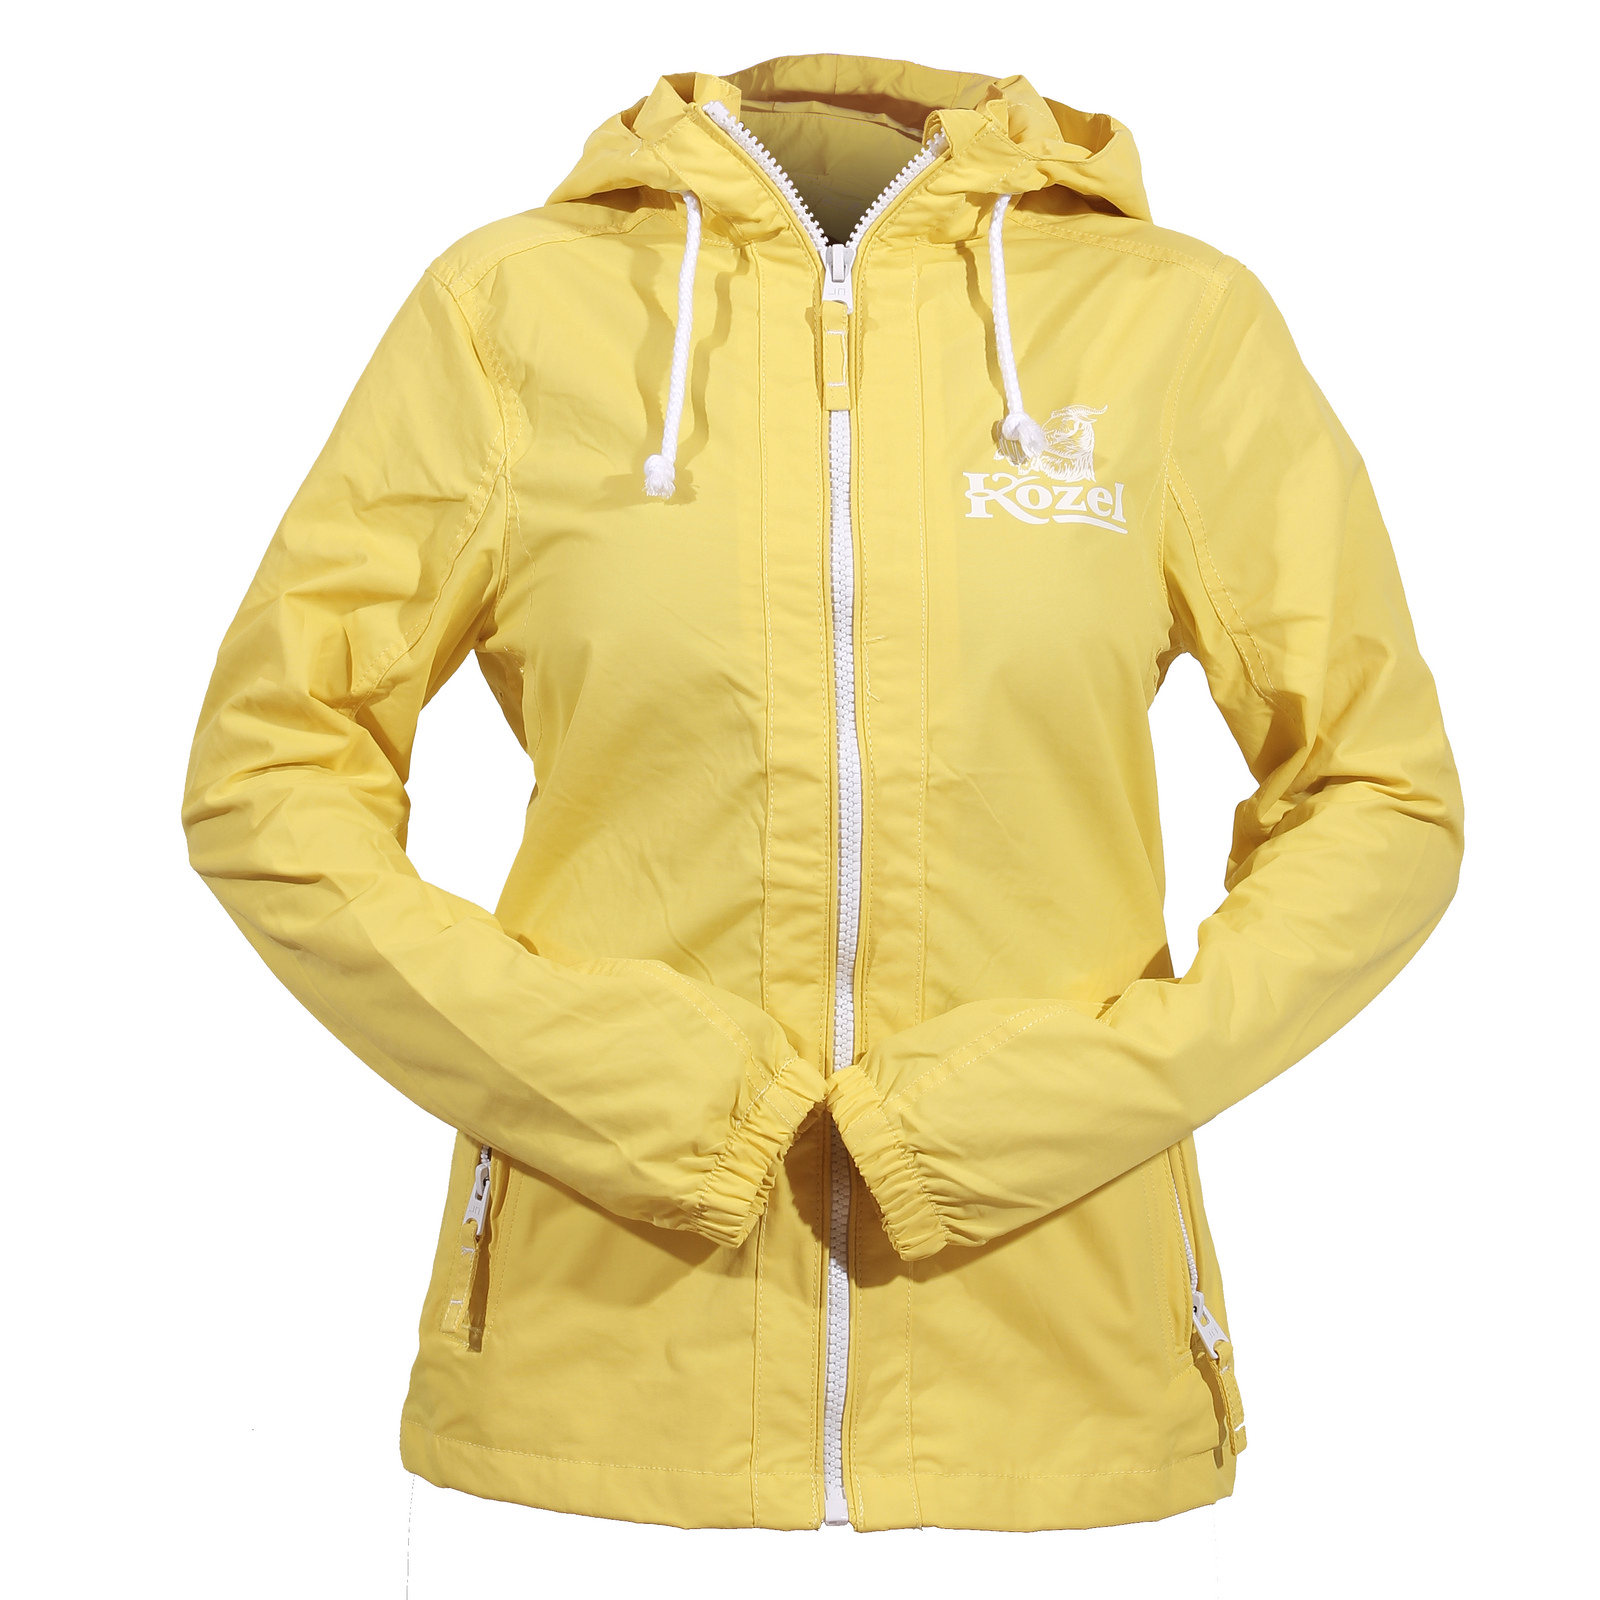 Women's Kozel yellow jacket